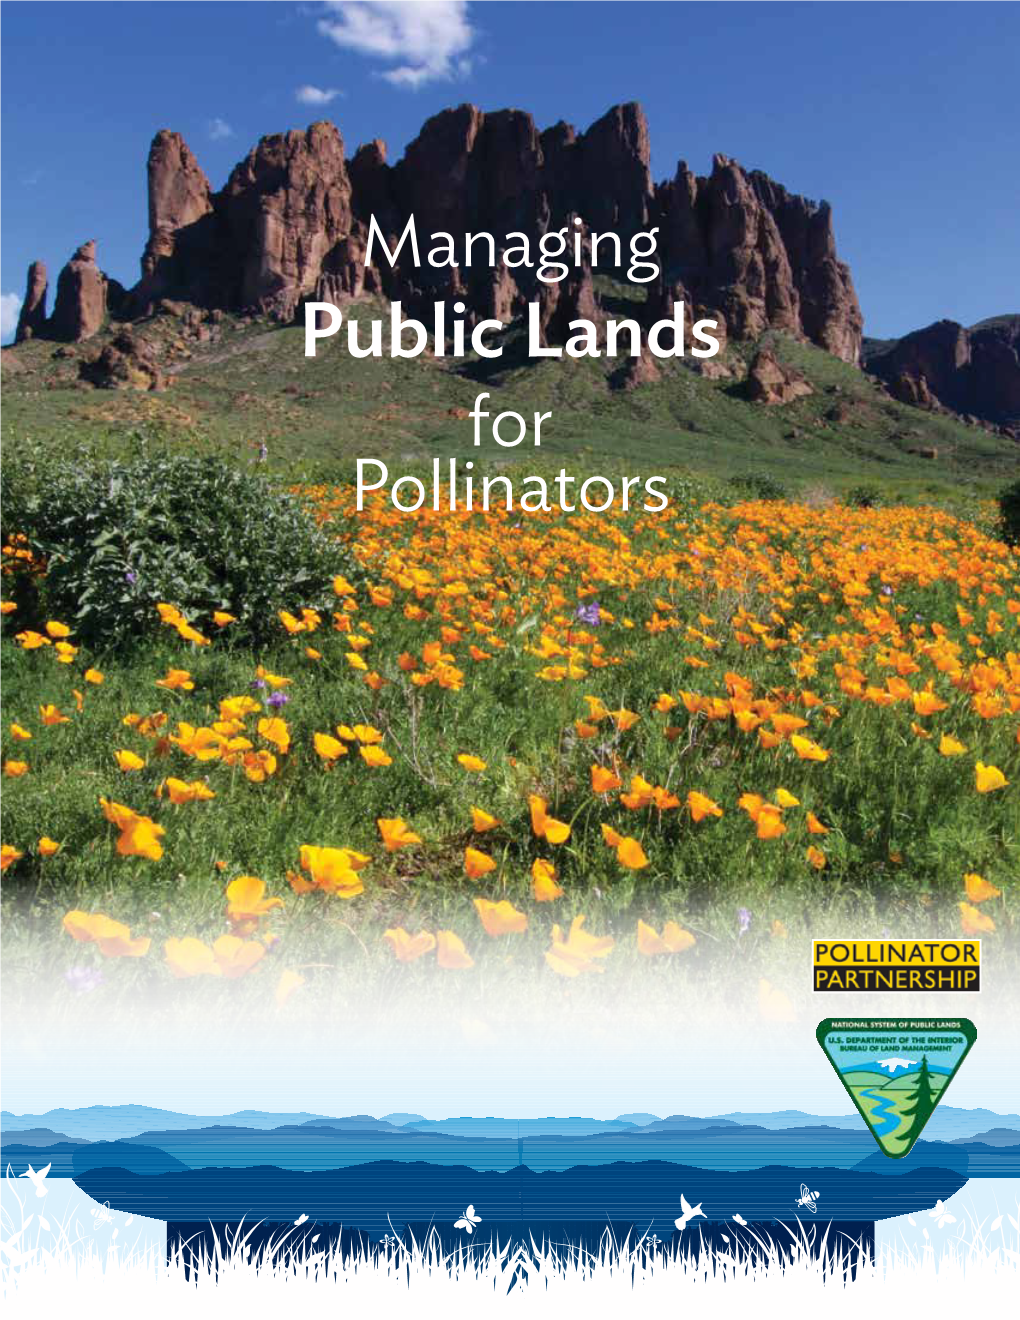 Managing Public Lands for Pollinators